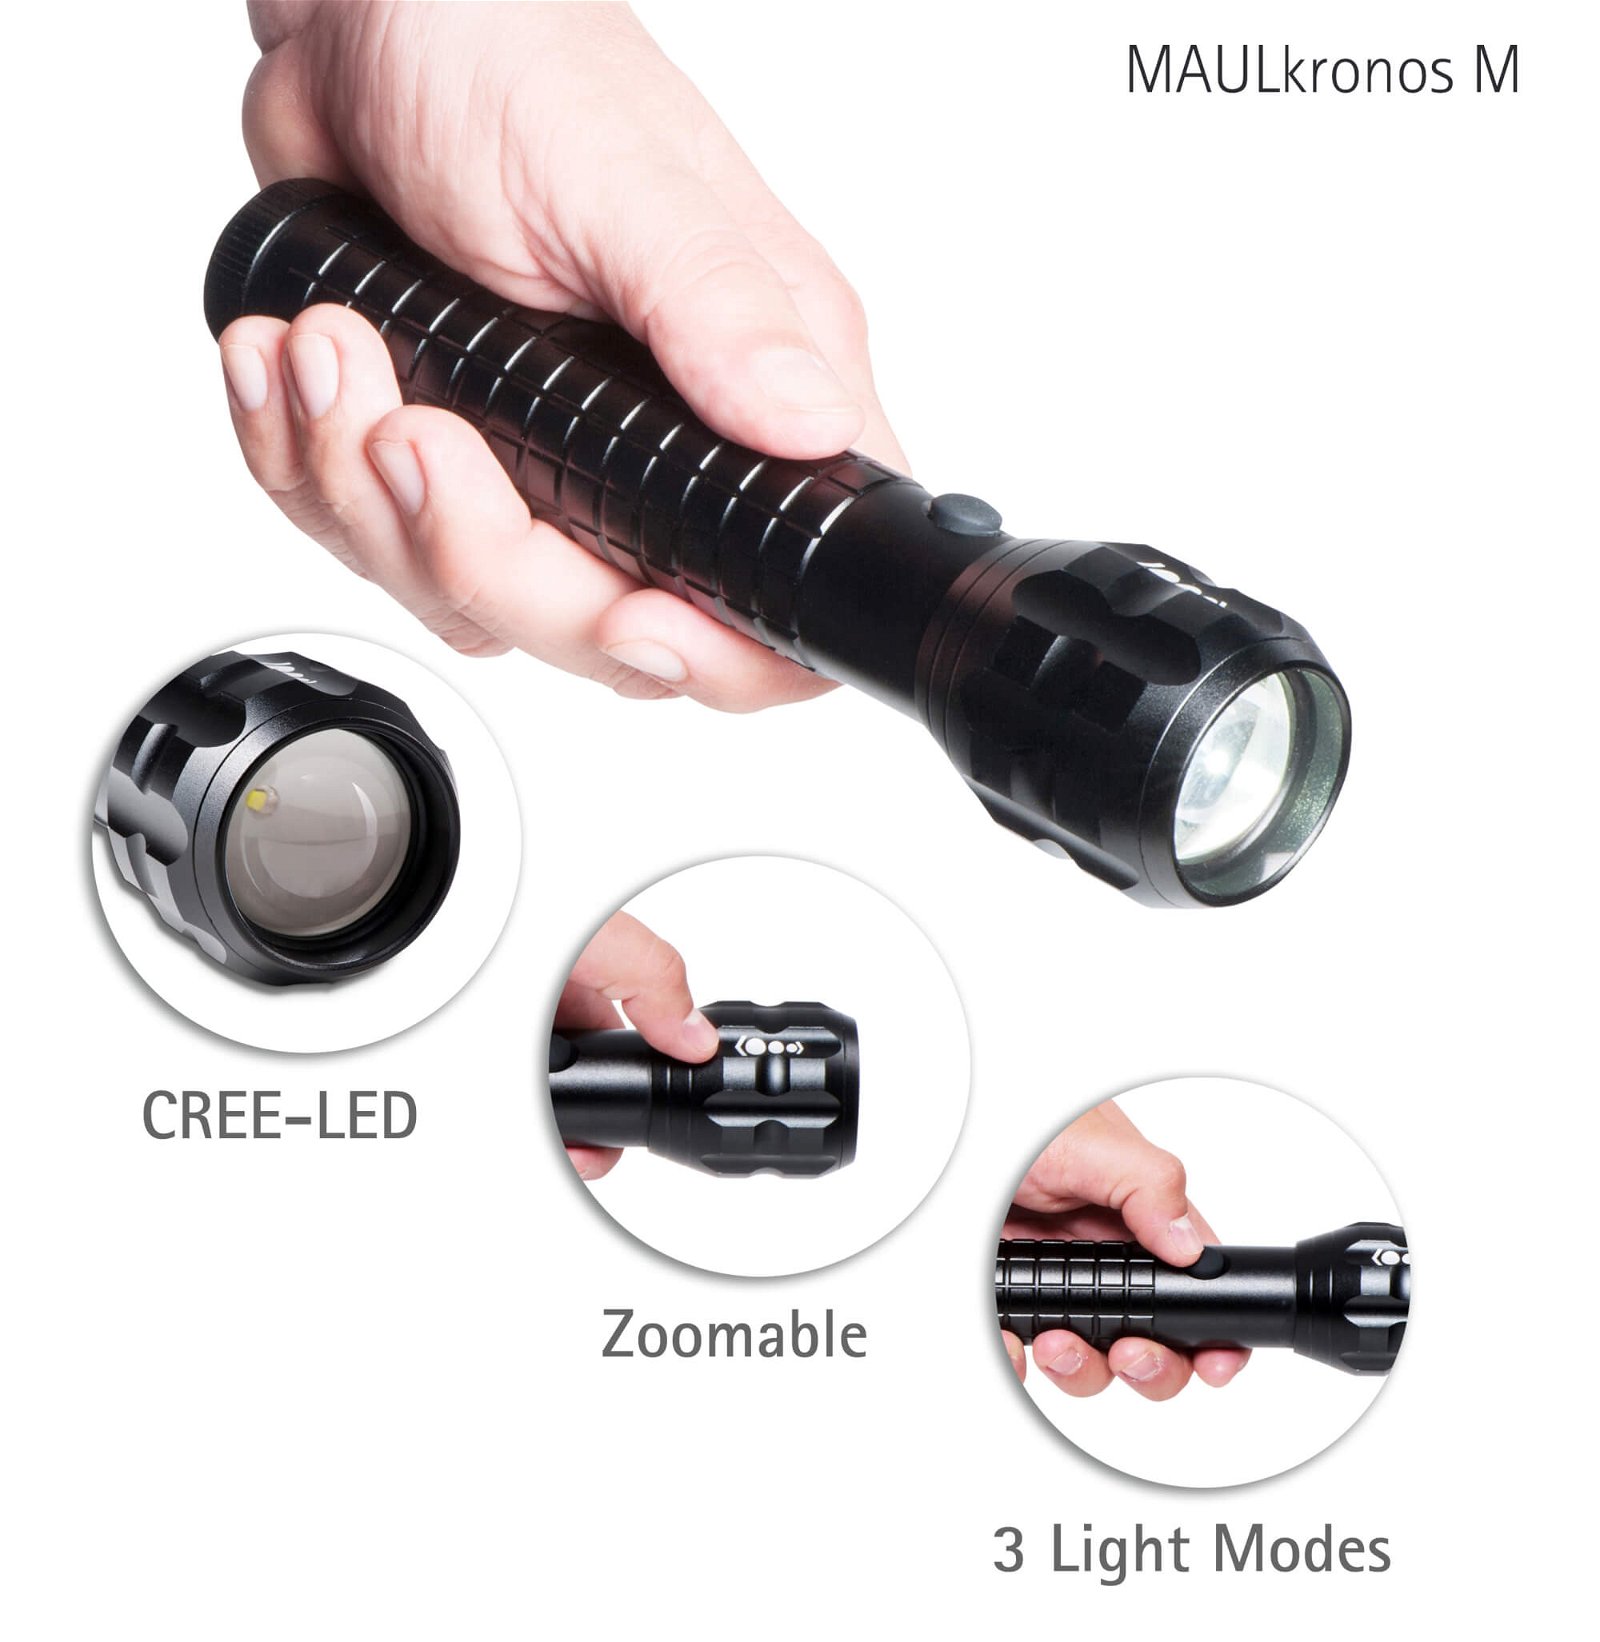 LED-Taschenlampe MAULkronos M - Info